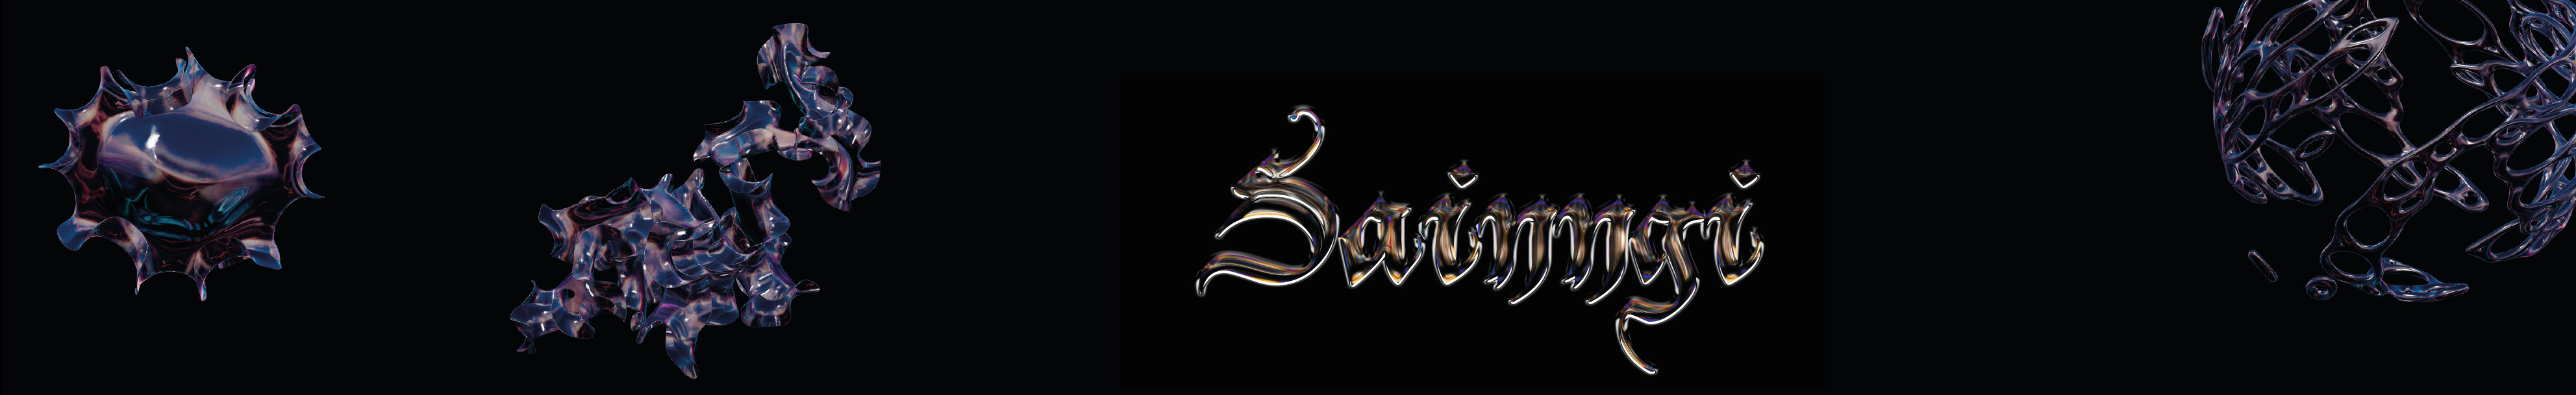 Banner de perfil de Saida | sainngi